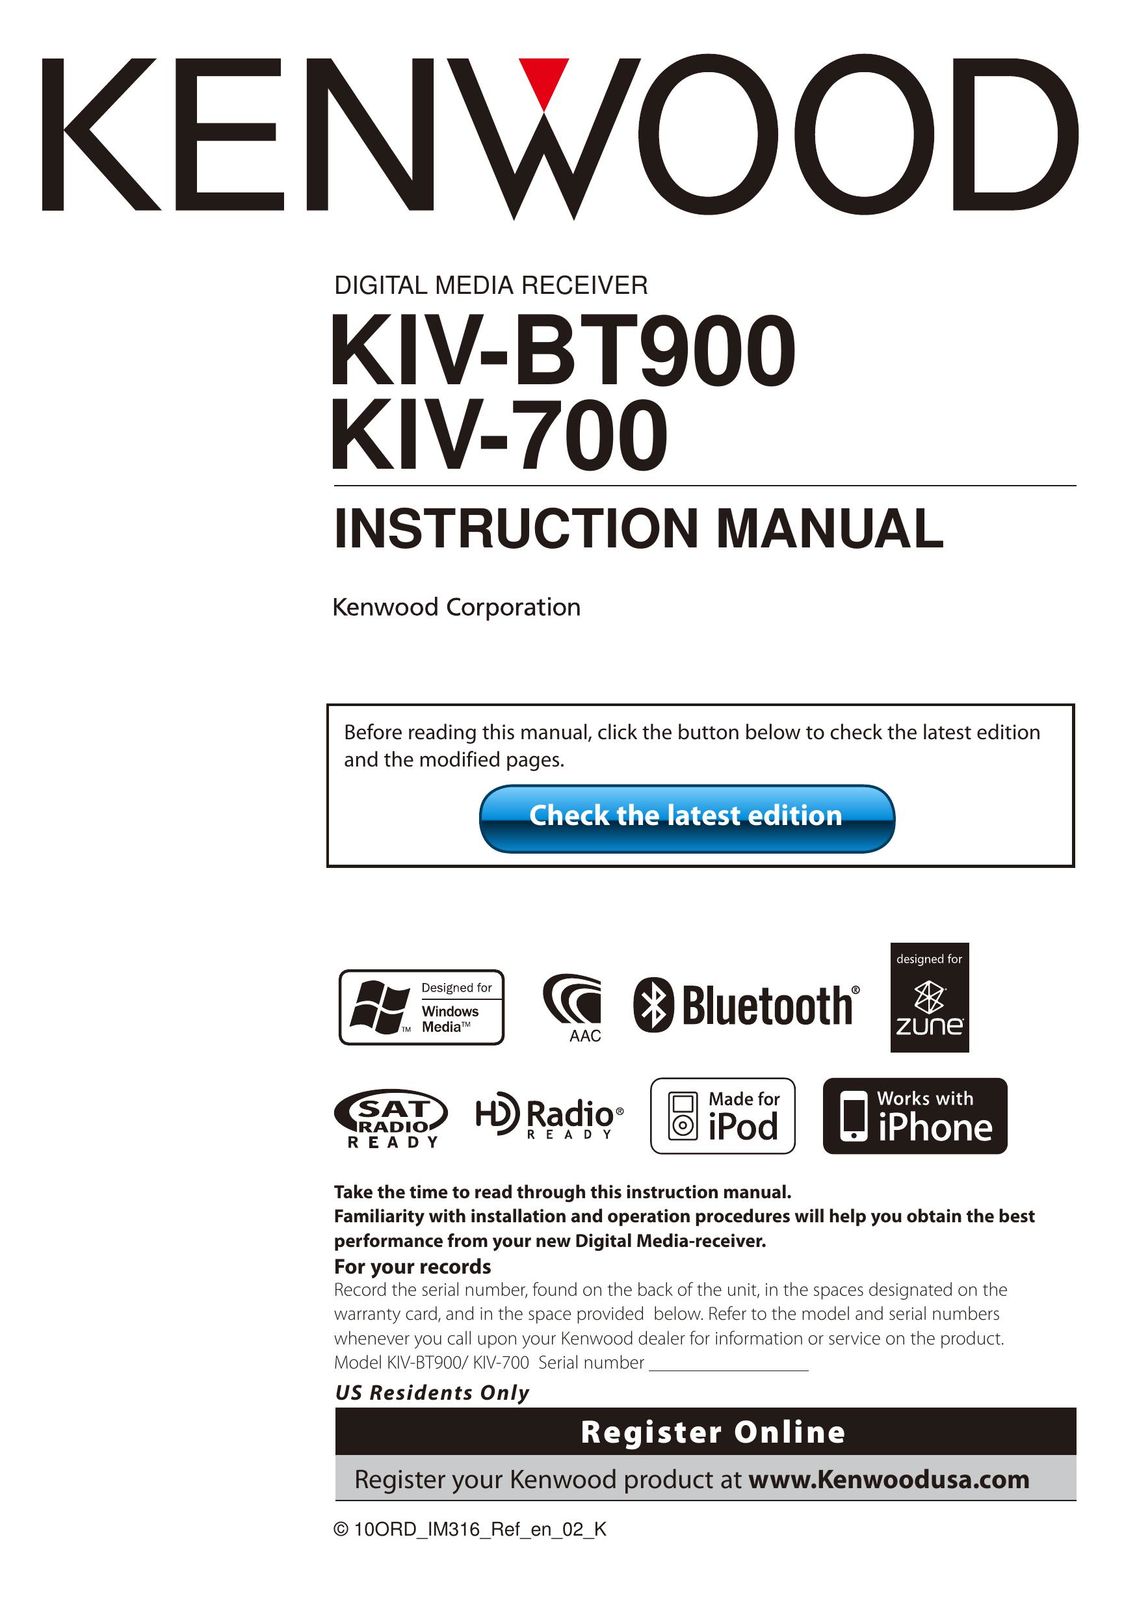 Kenwood KIV-700 Home Theater System User Manual